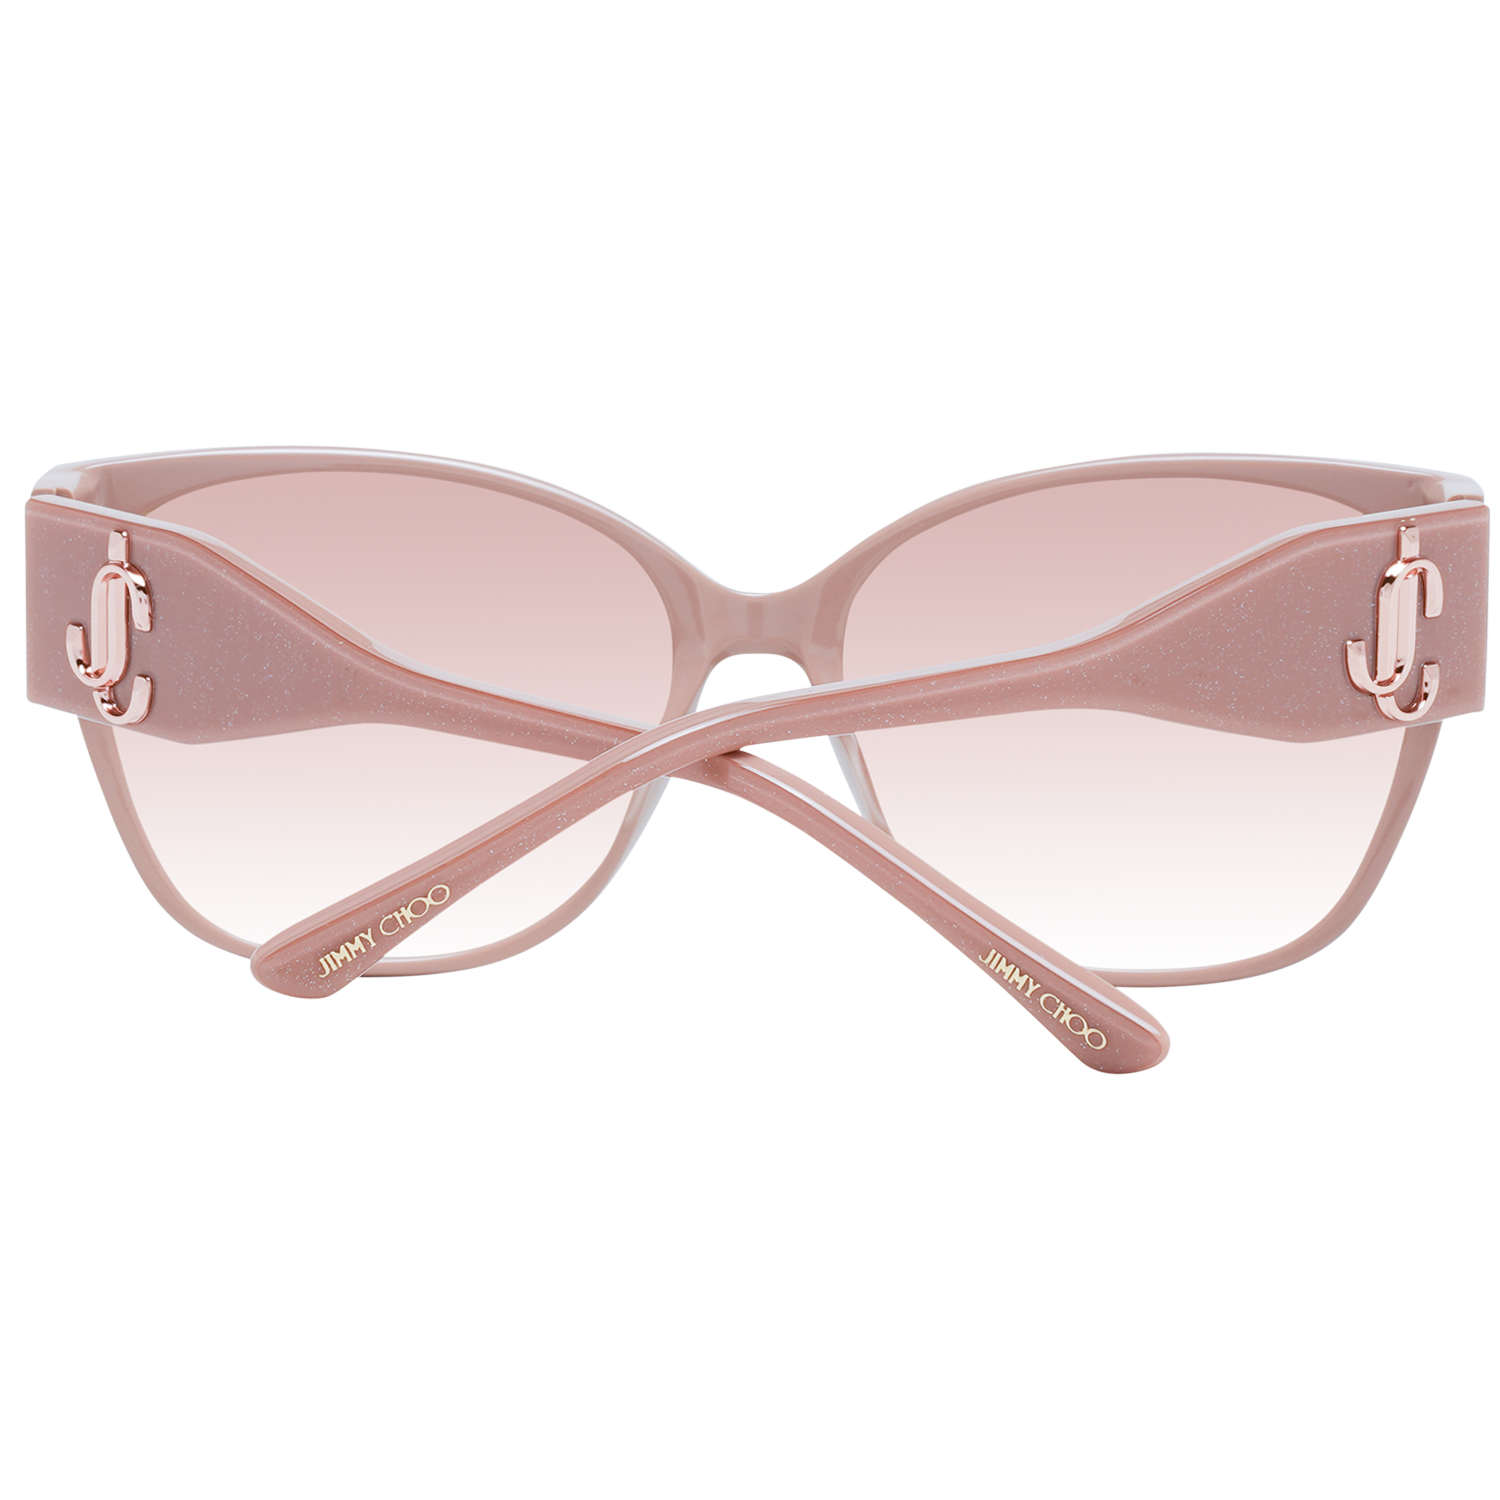 Jimmy Choo Sunglasses Jimmy Choo Sunglasses SHAY/S KONHA 58mm - Nude/Brown Gradient Cat Eye Eyeglasses Eyewear UK USA Australia 